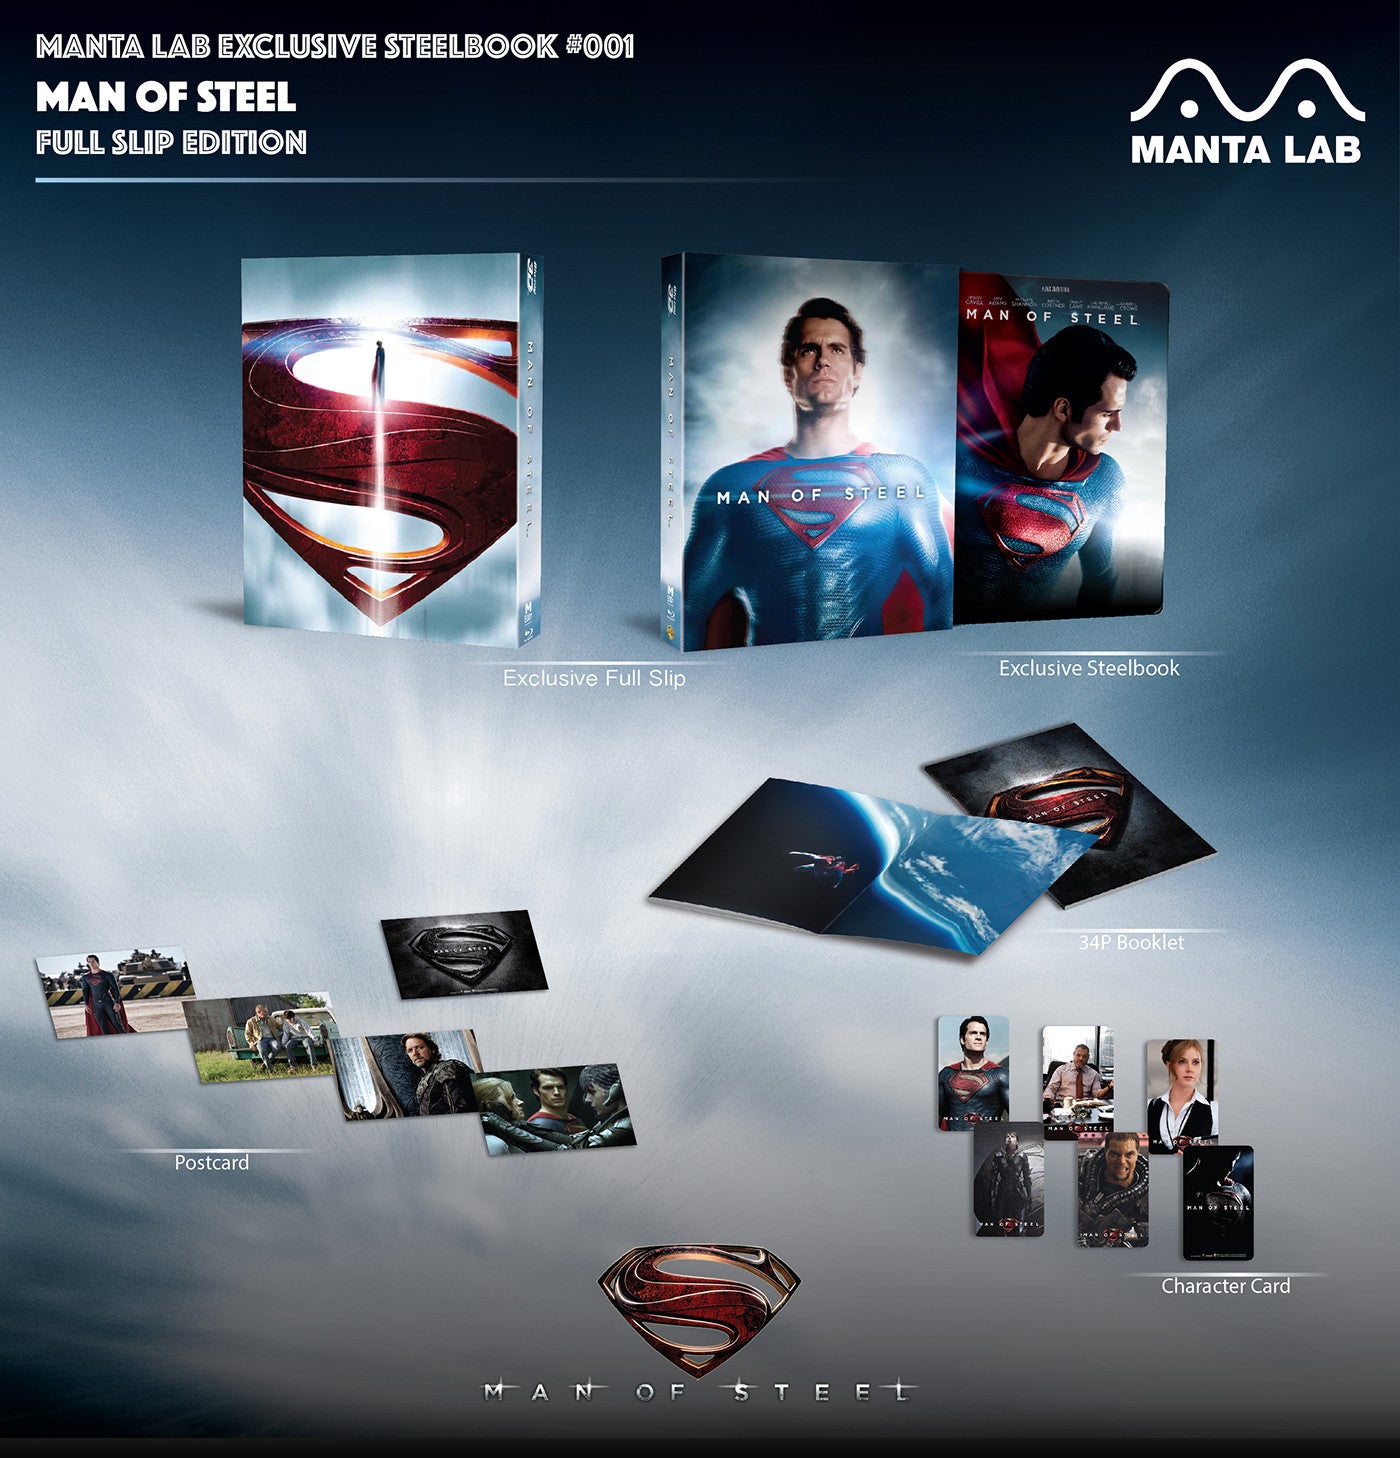 Man of Steel 3D Blu-ray (Blu-ray 3D + Blu-ray + DVD)